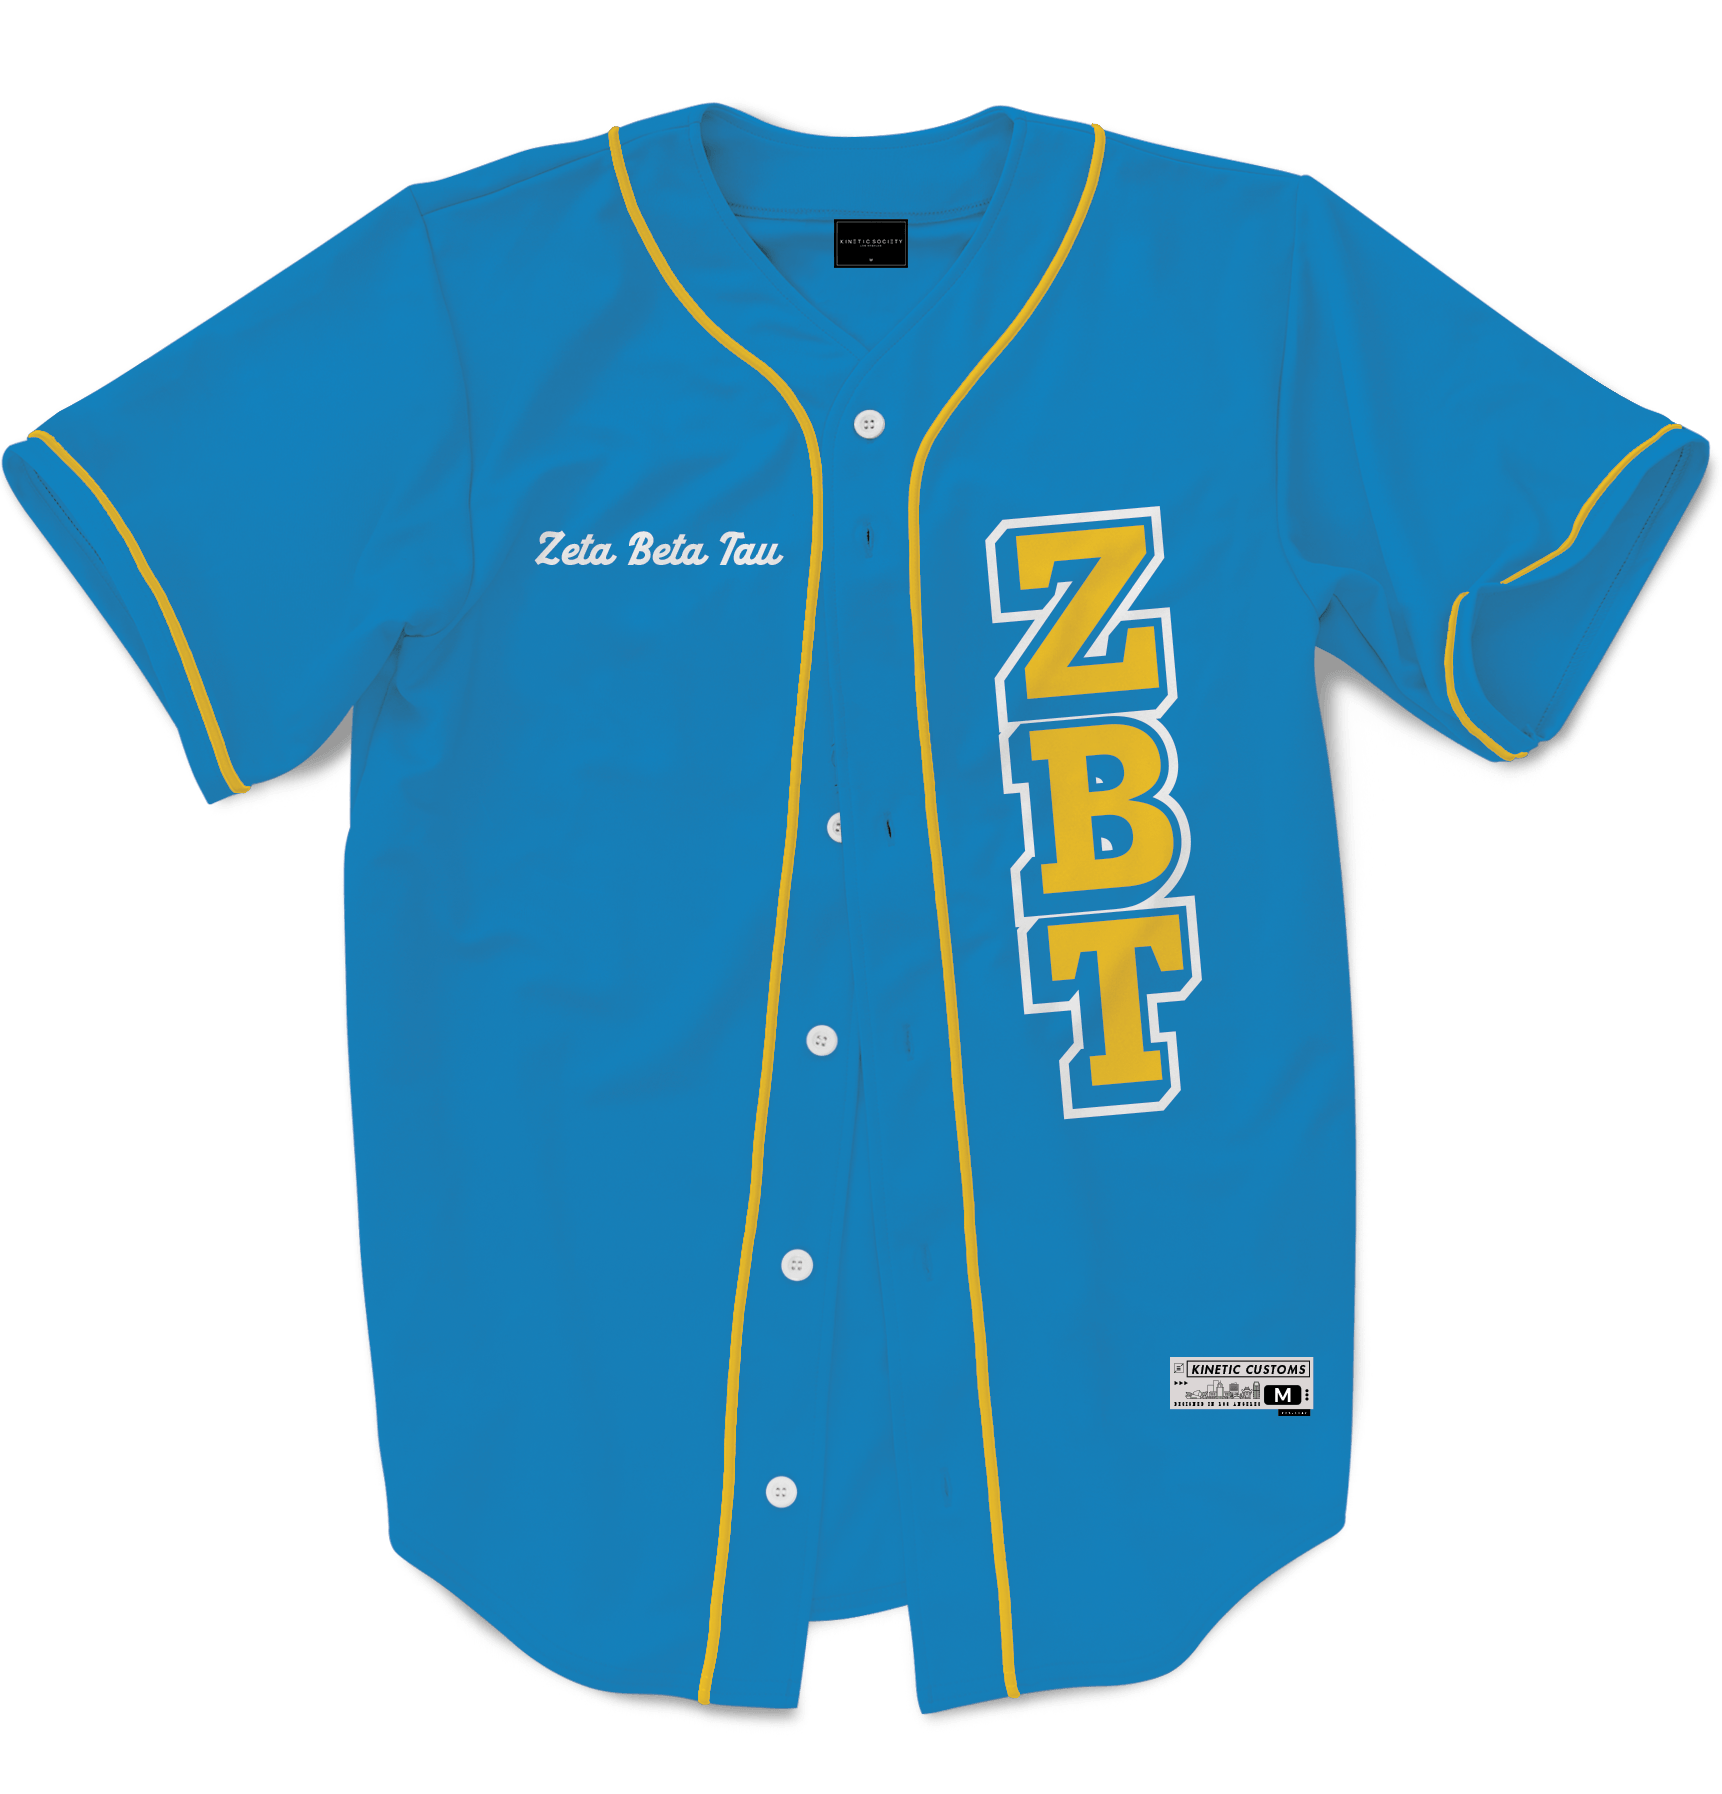 Zeta Beta Tau - The Block Baseball Jersey Premium Baseball Kinetic Society LLC 